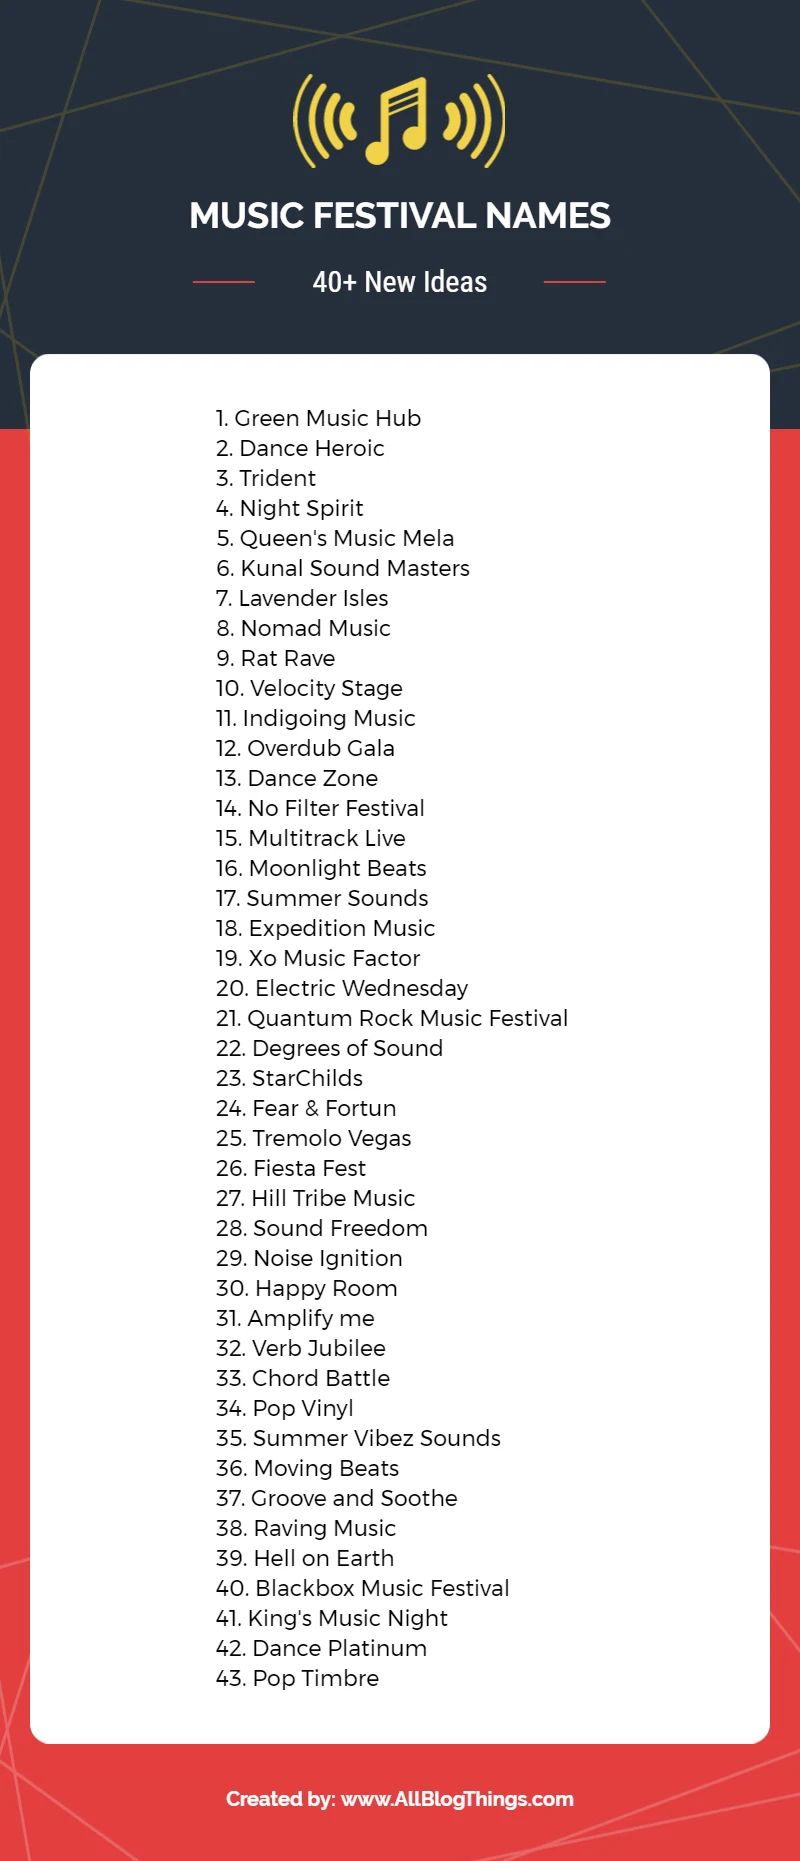 Music Festival Names [infographic]